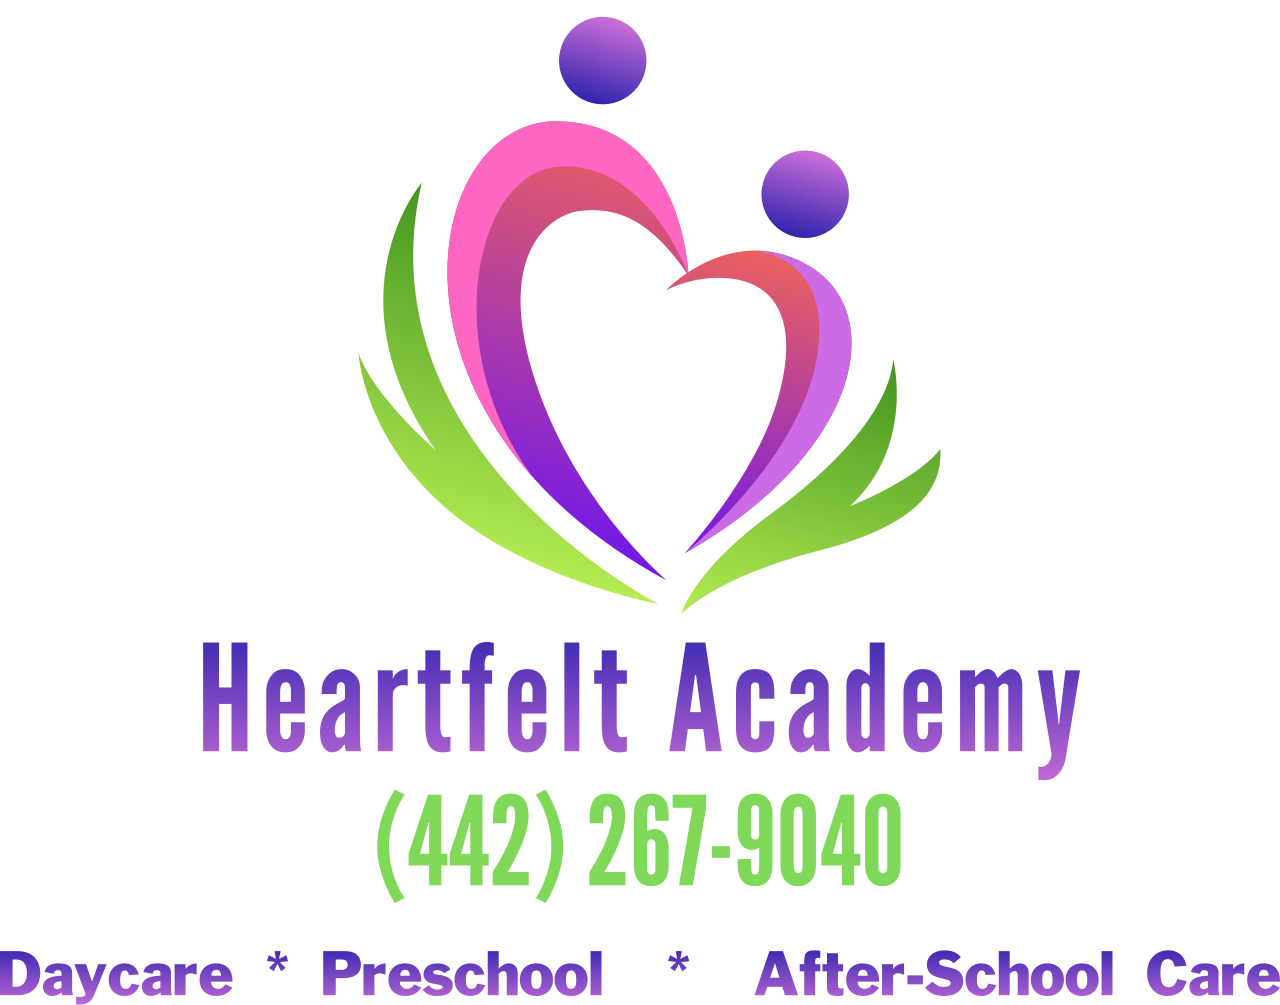 Heartfelt Academy's logo